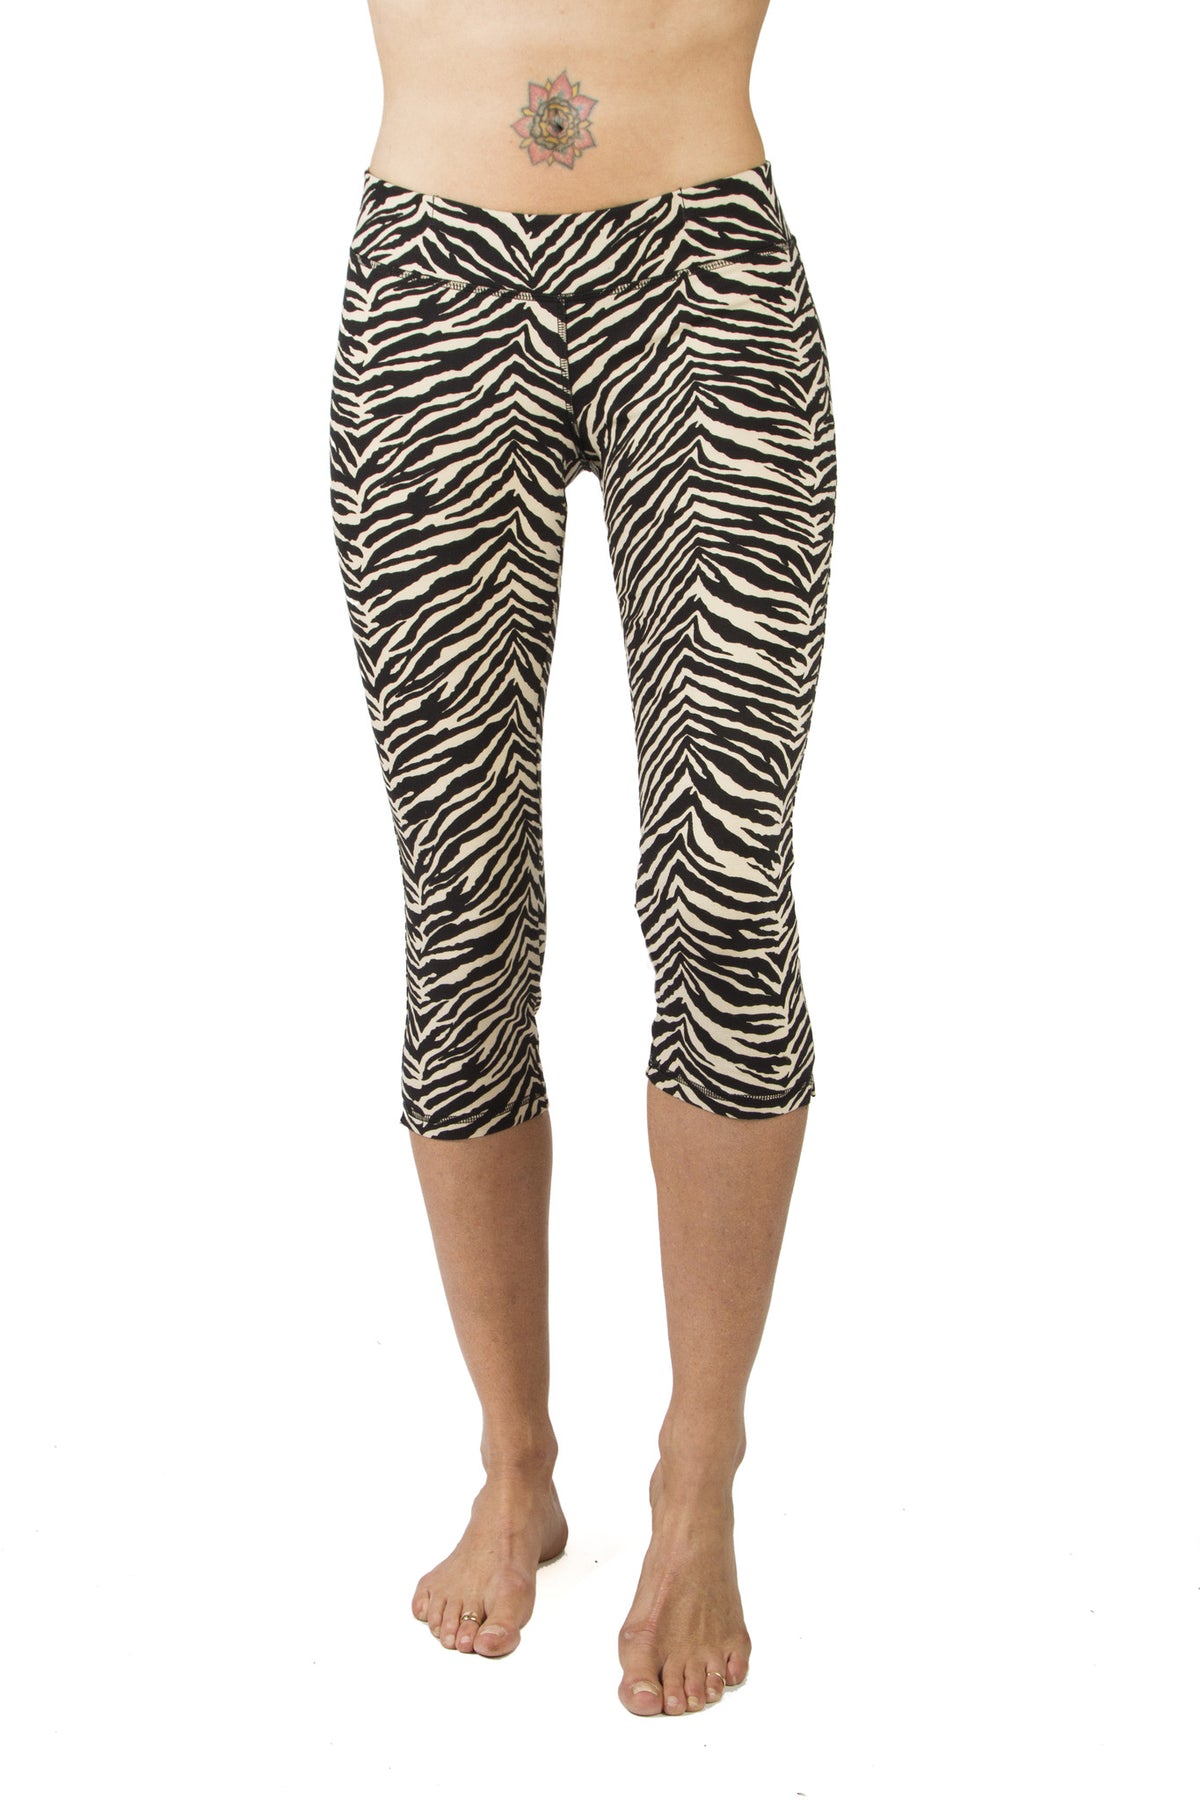 Cream Black Zebra Print Leggings, Zebra Tights, Cotton Lycra